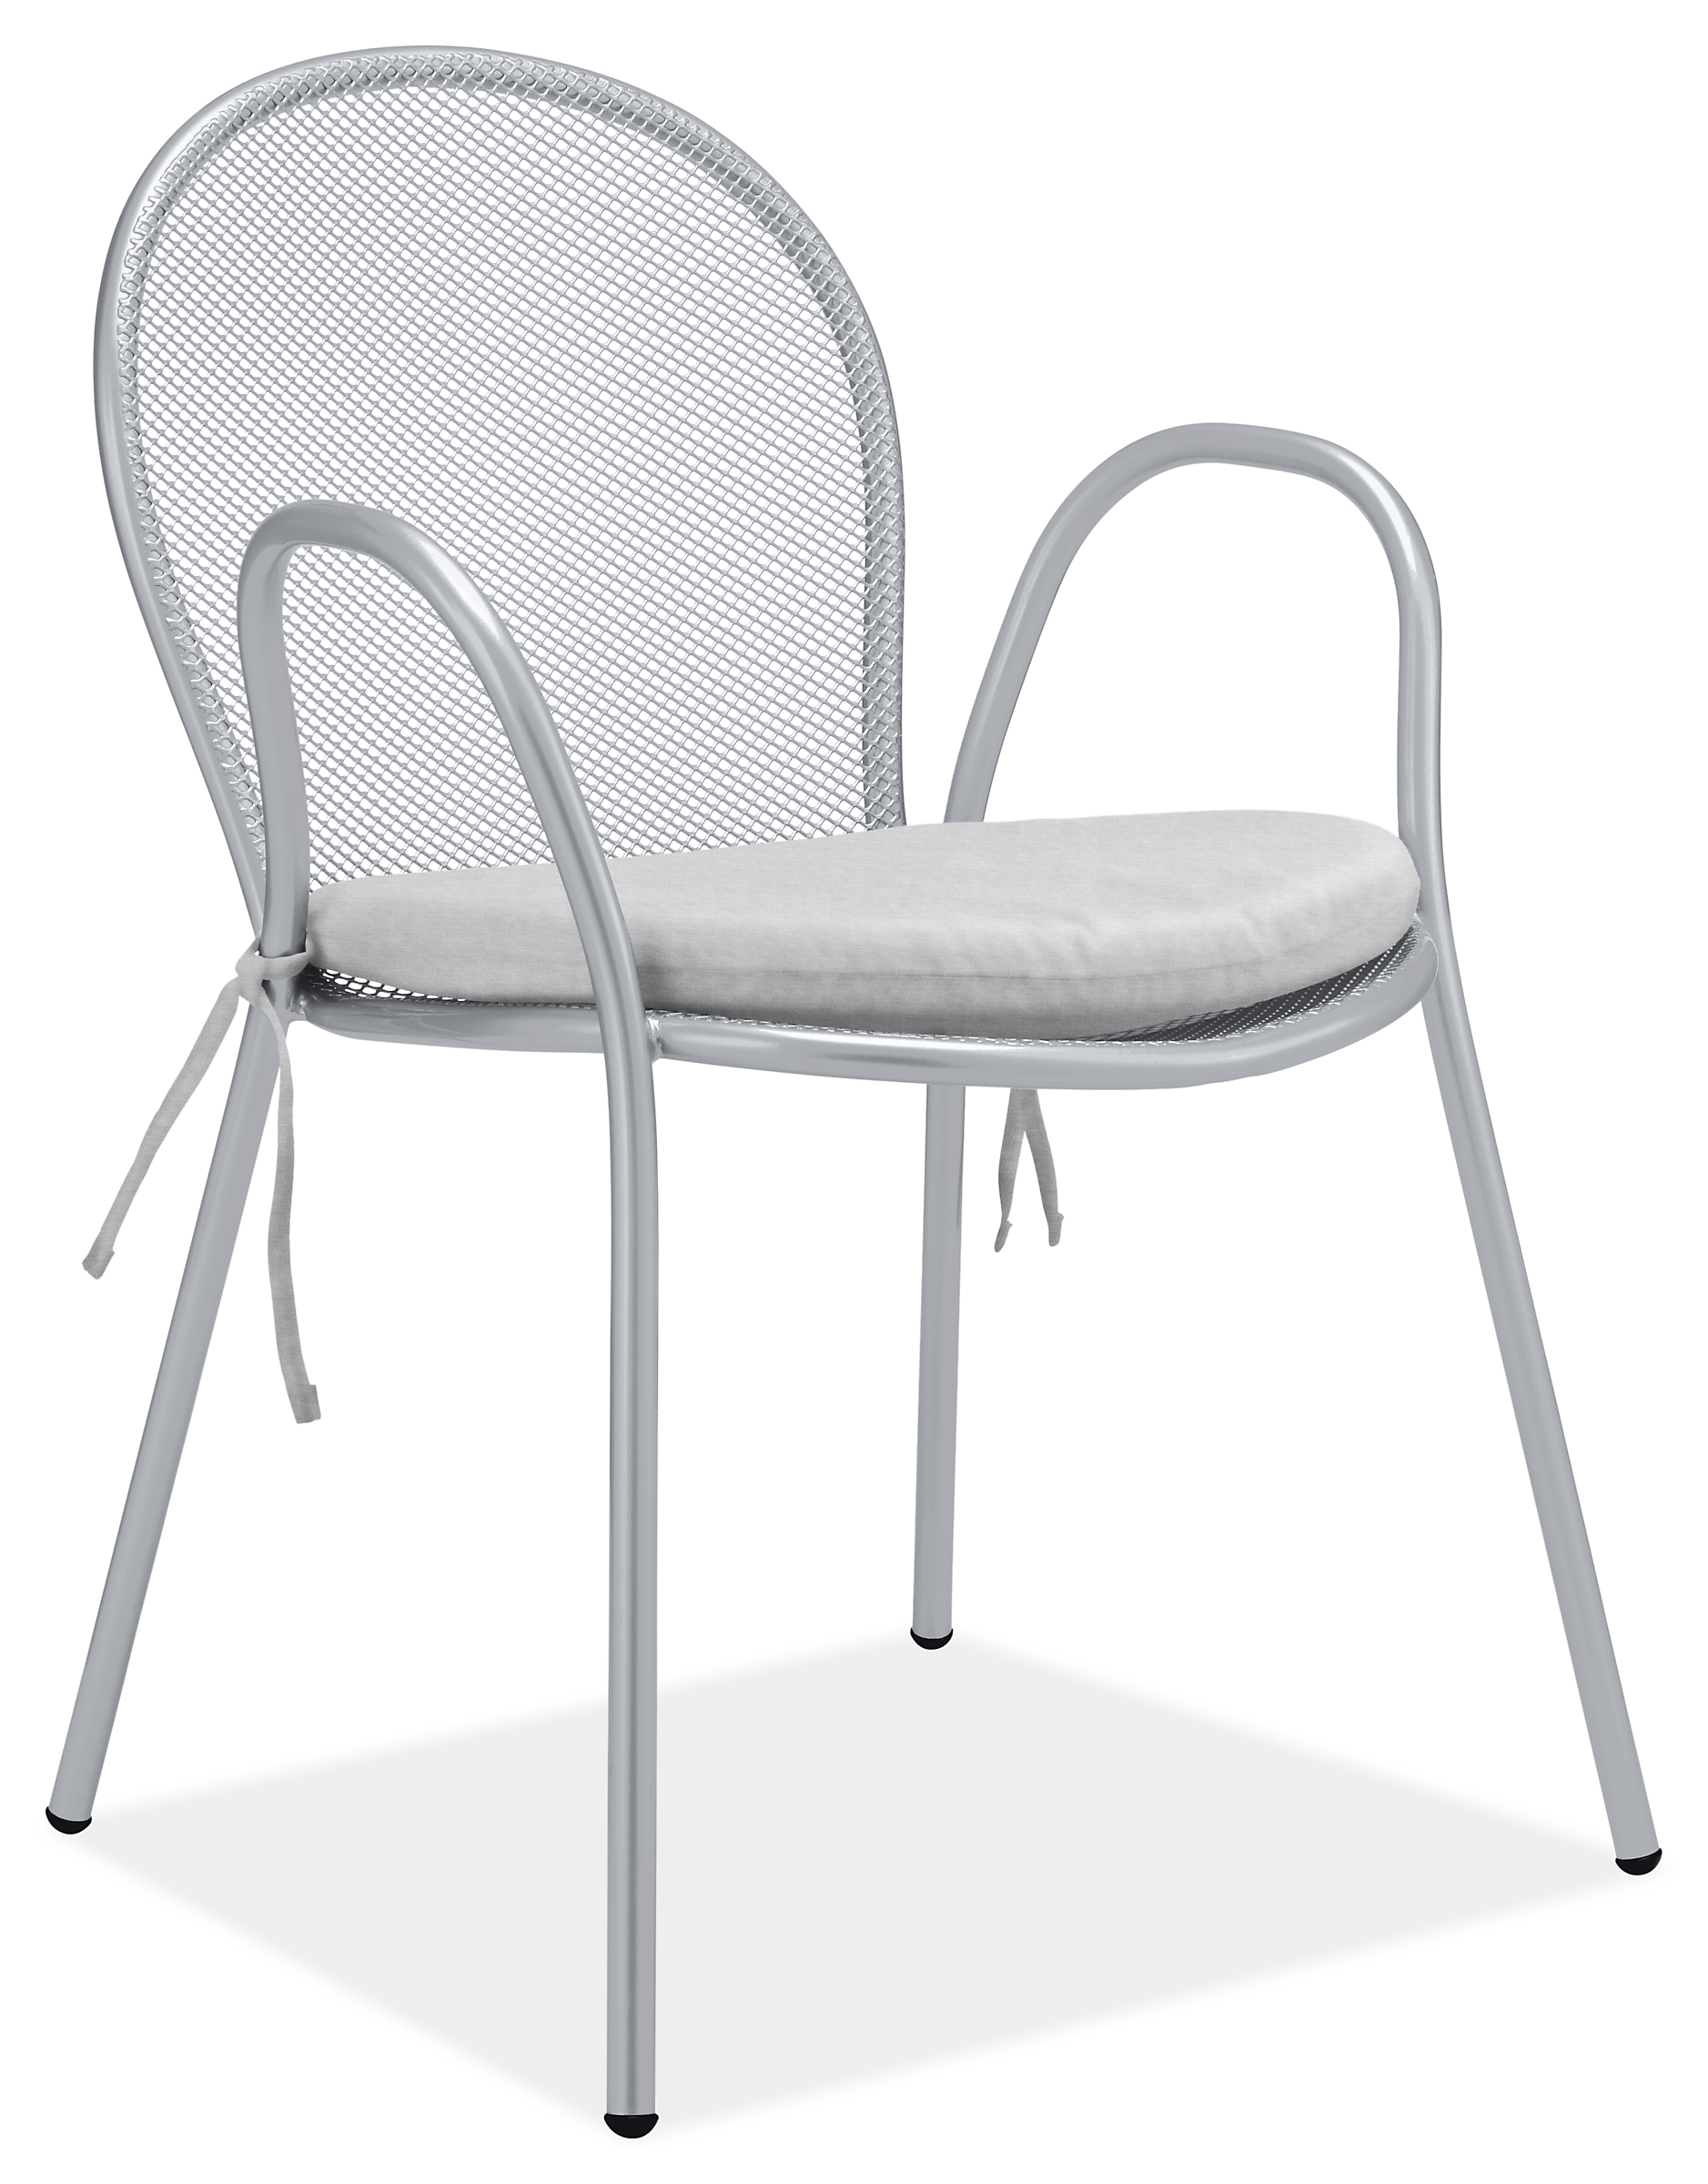 Rio Chair in Silver with Cushion in Sunbrella Canvas Cement